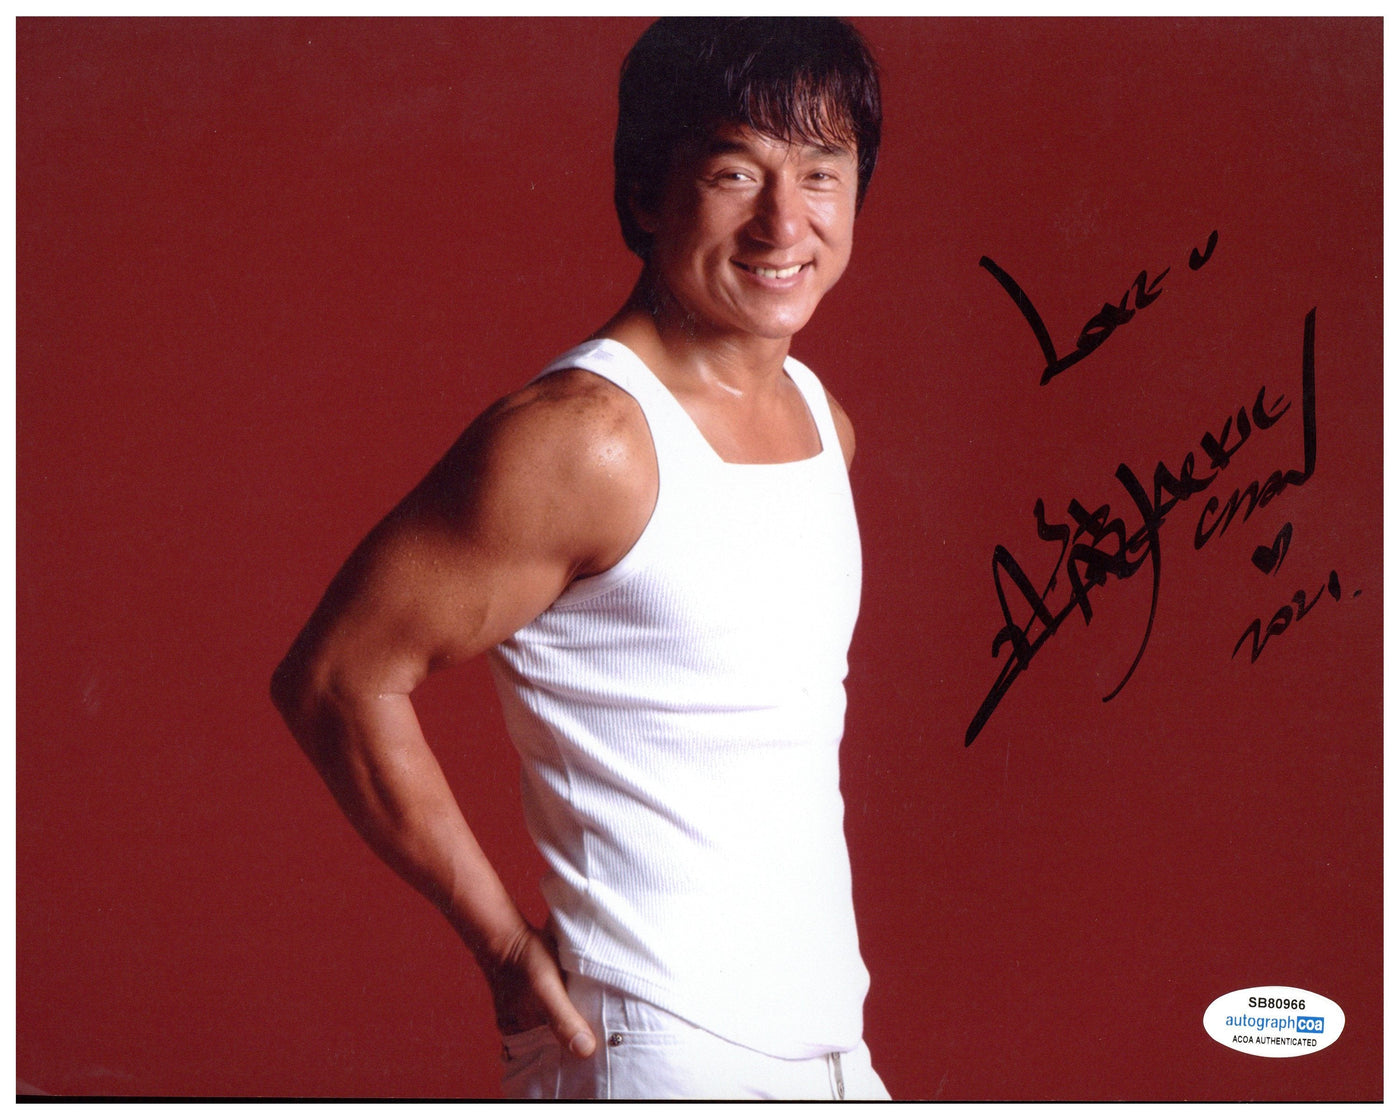 Jackie Chan Signed 8x10 Photo Rush Hour Autographed AutographCOA